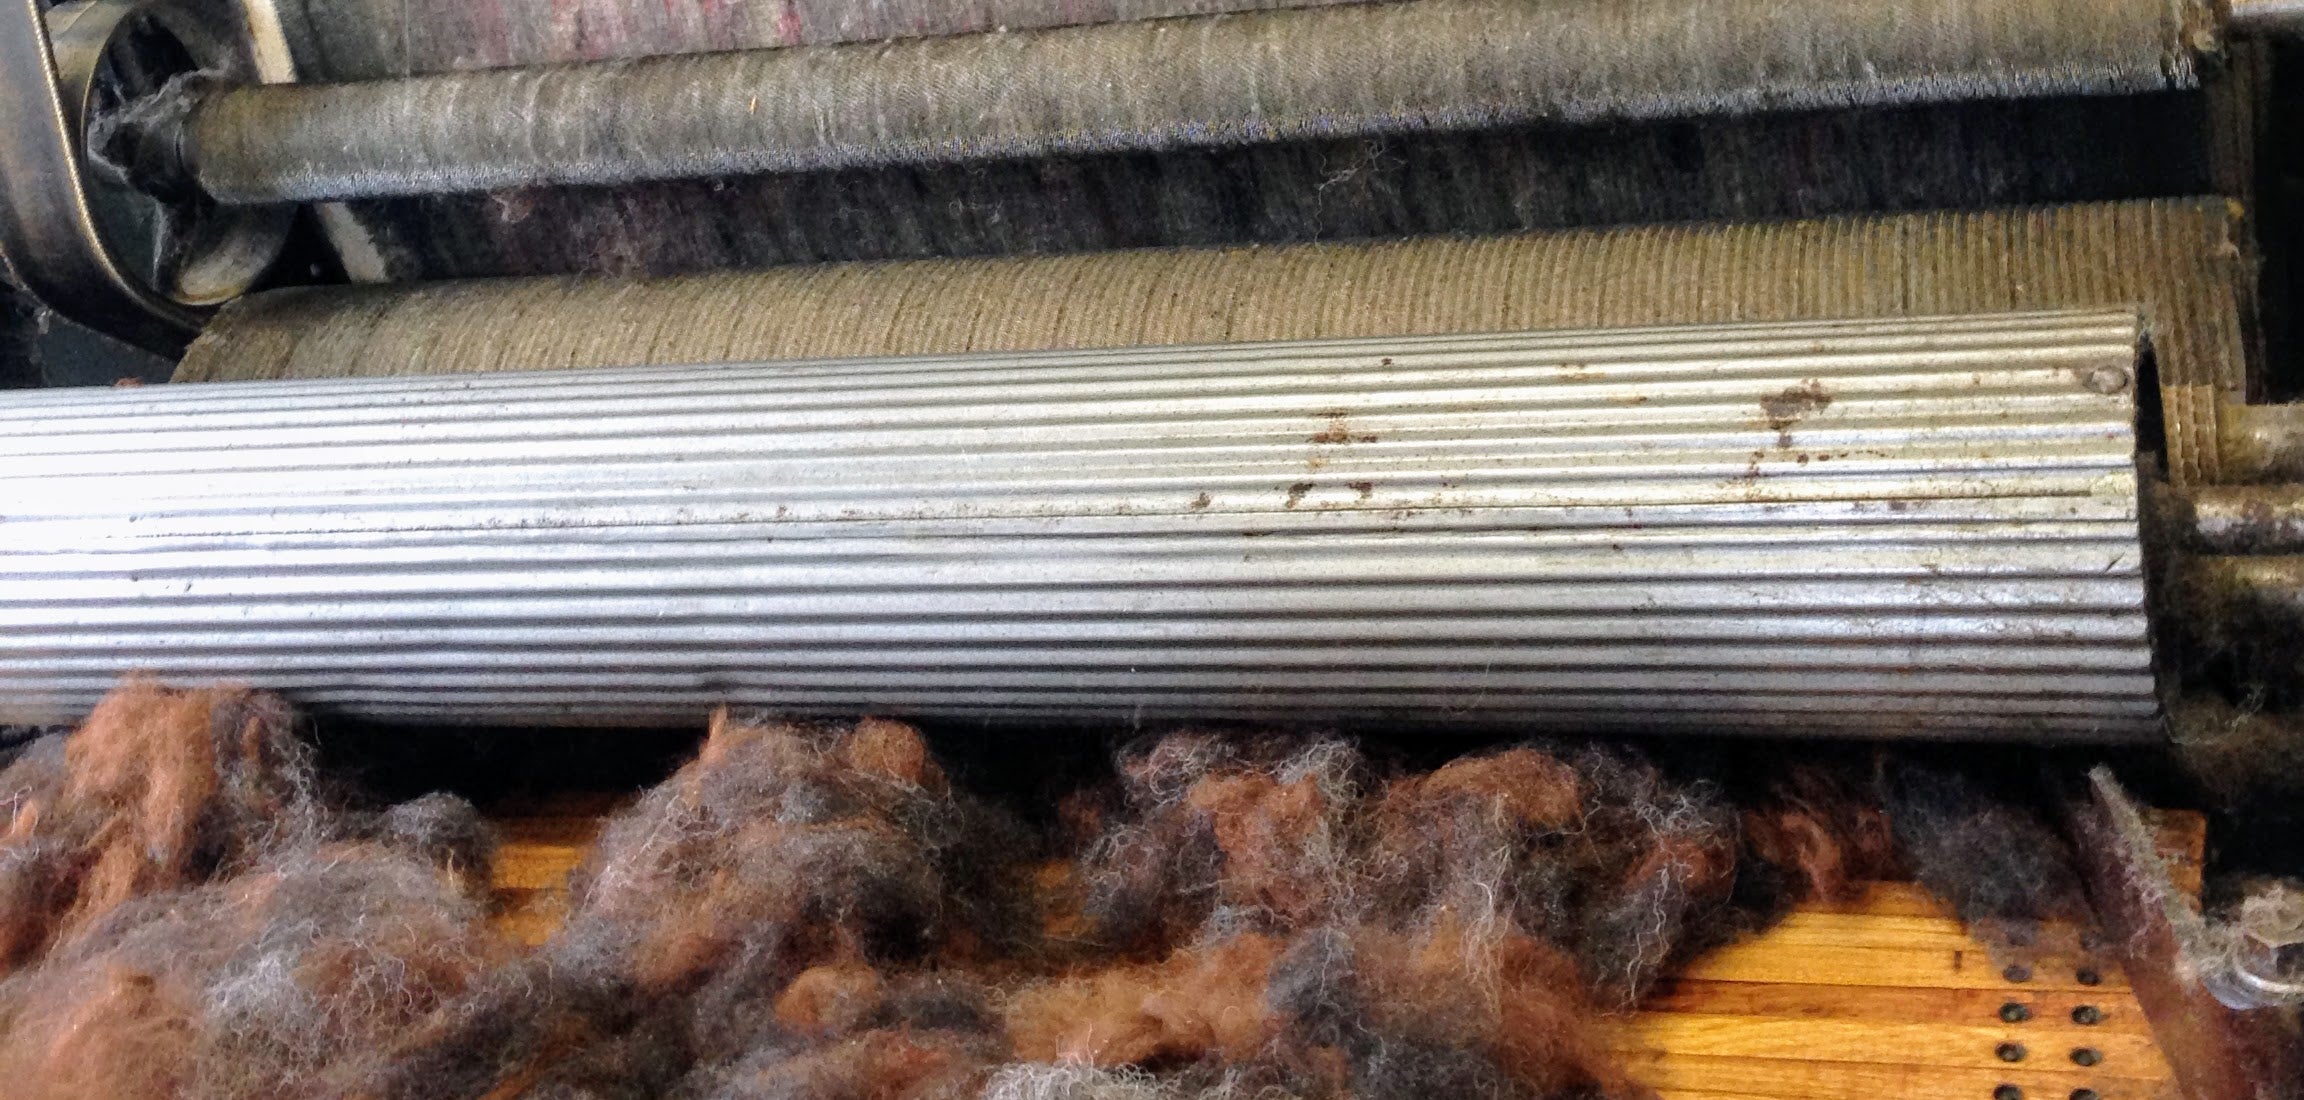 SURPRISED Alpaca Shearing Technique 🦙 - Alpaca Wool Processing in Factory  - Harvesting Alpaca Fiber 